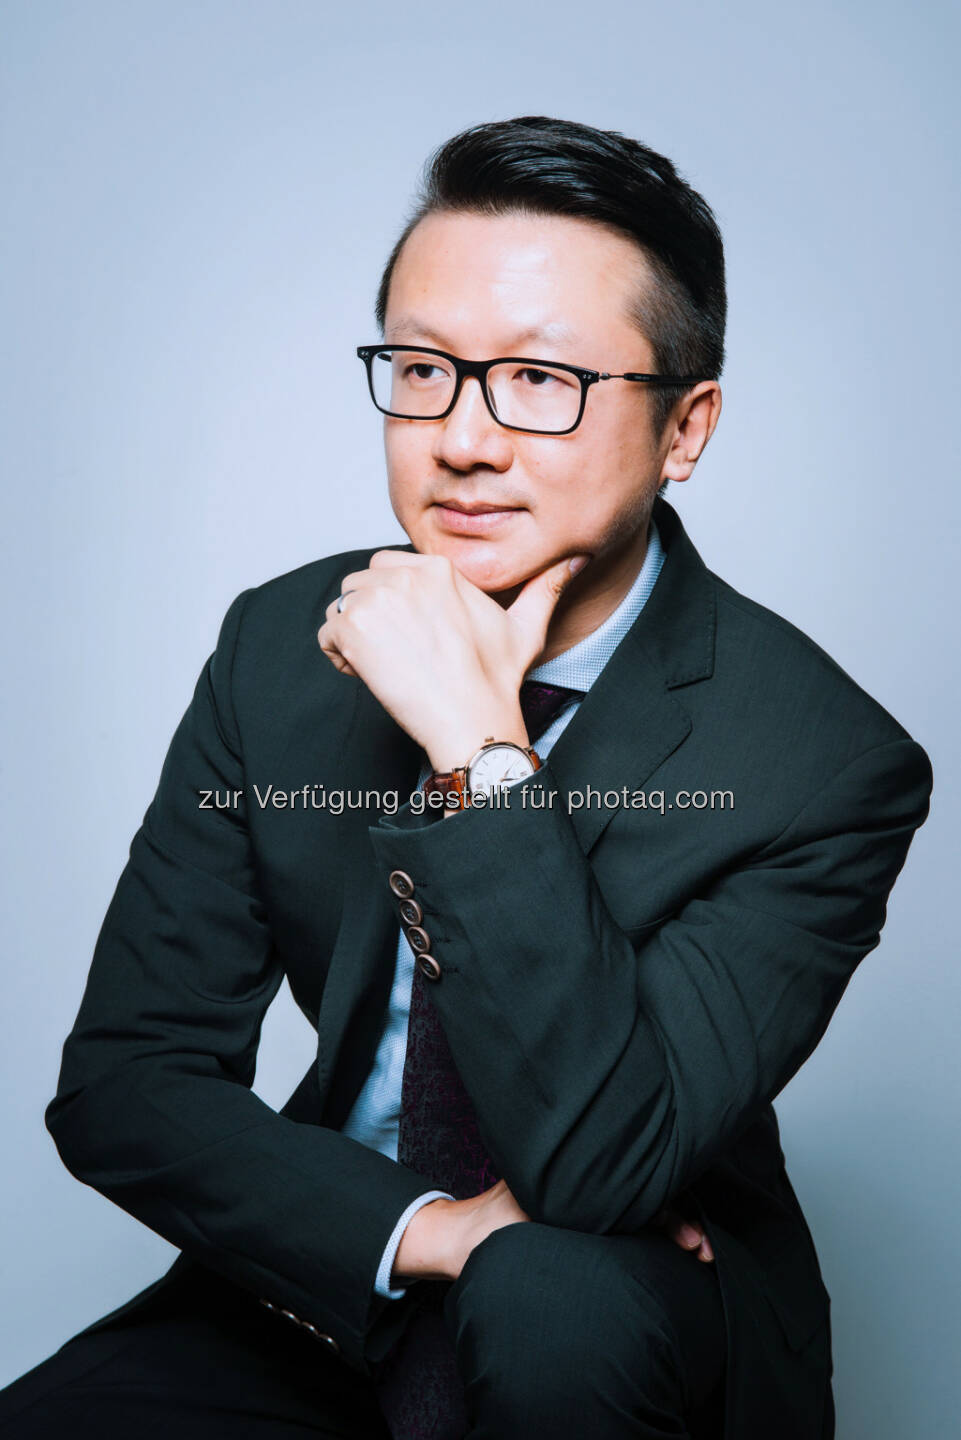 Oscar Jiang Jing ist der neue Geschäftsführer bei PTV China in Shanghai - PTV Group: PTV Group in China im Aufwind (Fotocredit: obs/PTV Group)